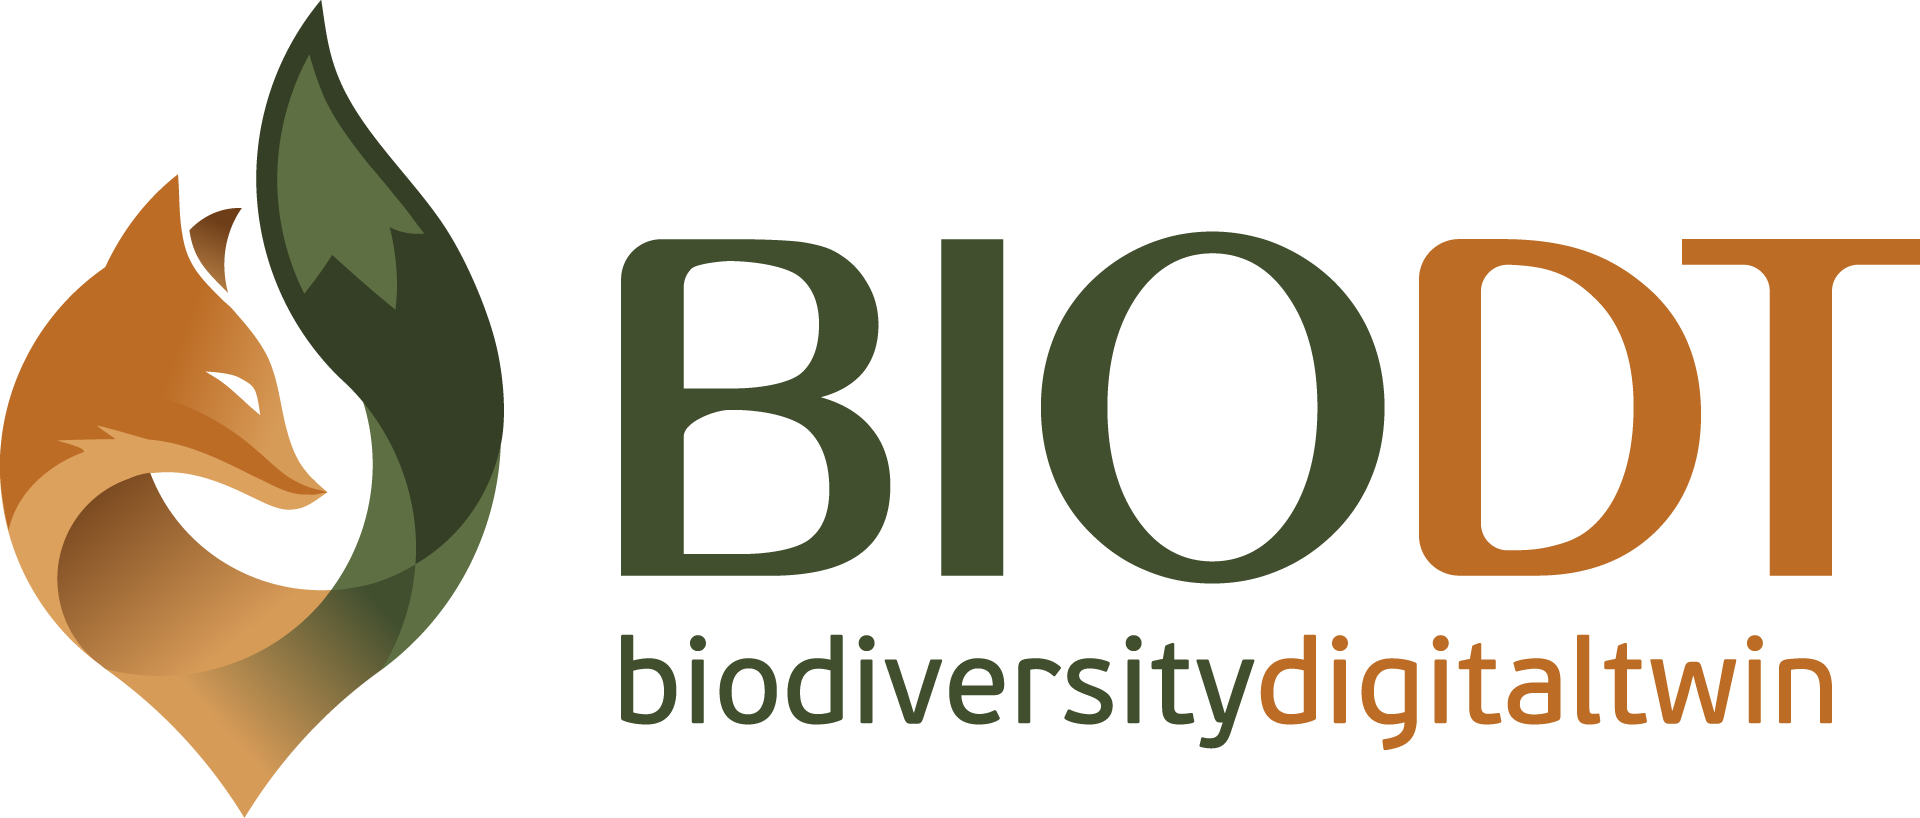 biodt-logo-16